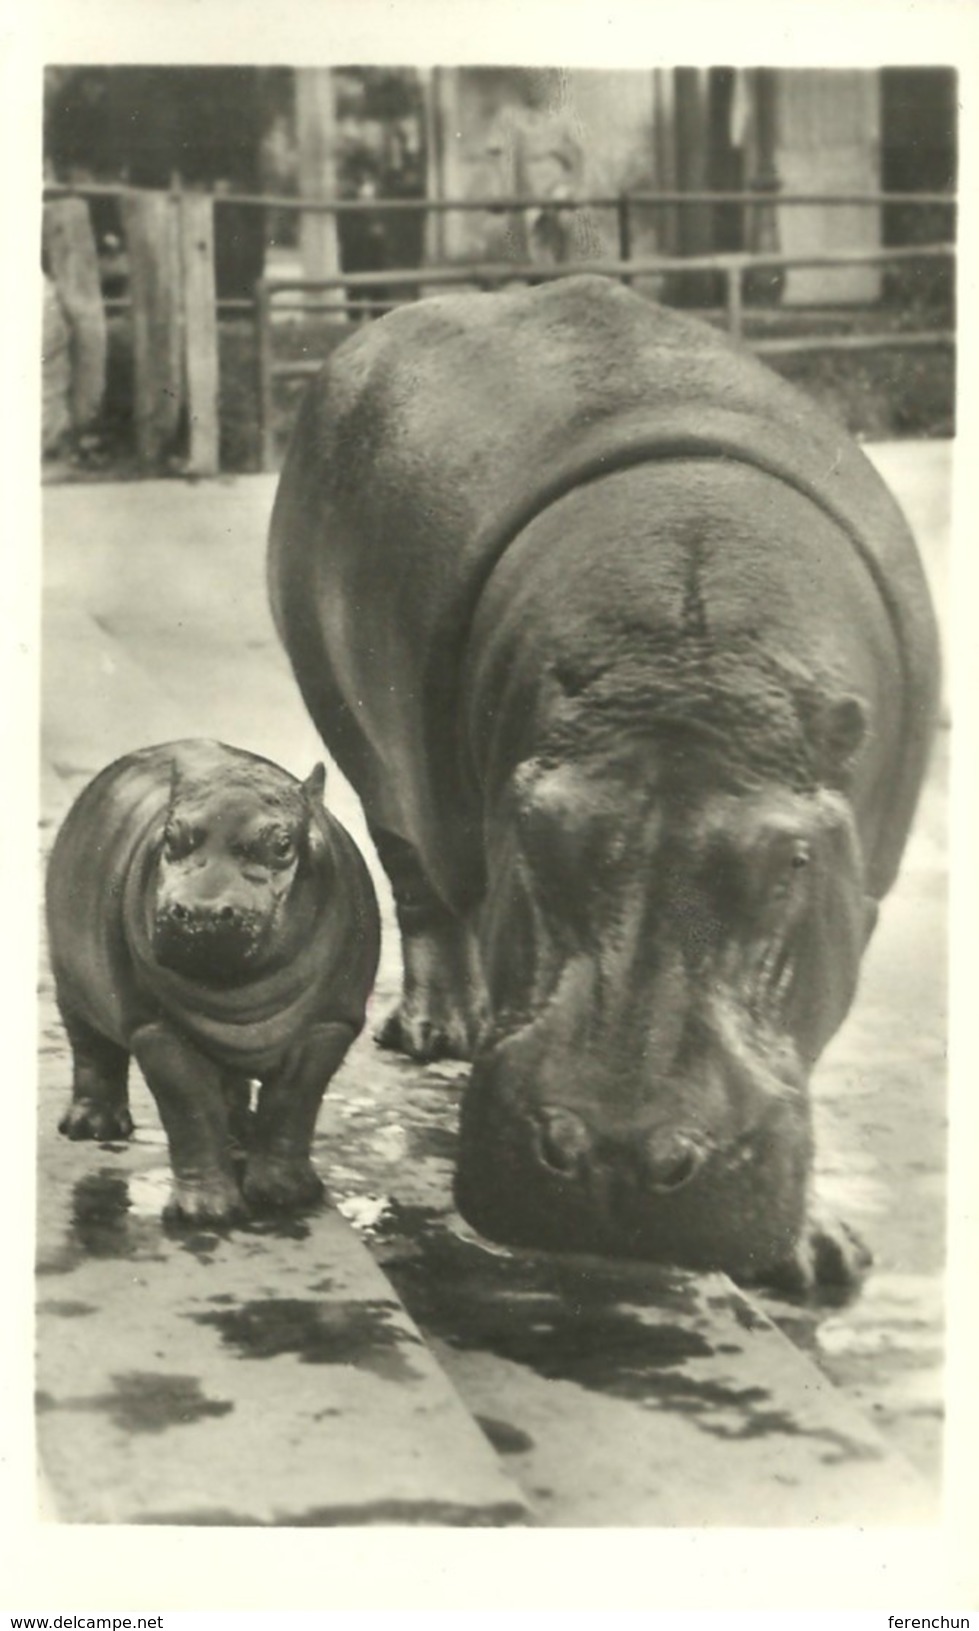 HIPPOPOTAMUS * BABY HIPPO * ANIMAL * ZOO & BOTANICAL GARDEN * BUDAPEST * KA 460 12 1 * Hungary - Hippopotamuses